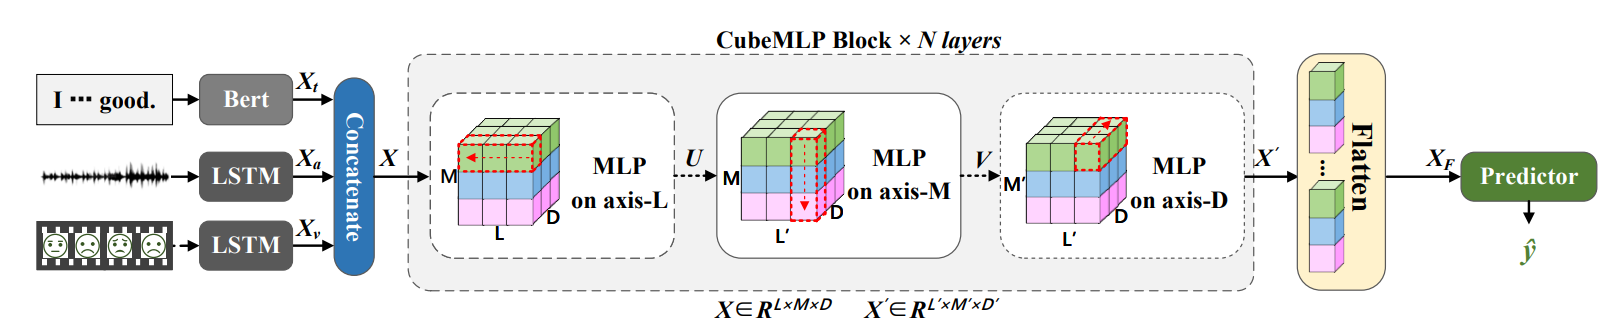 CubeMLP Overview